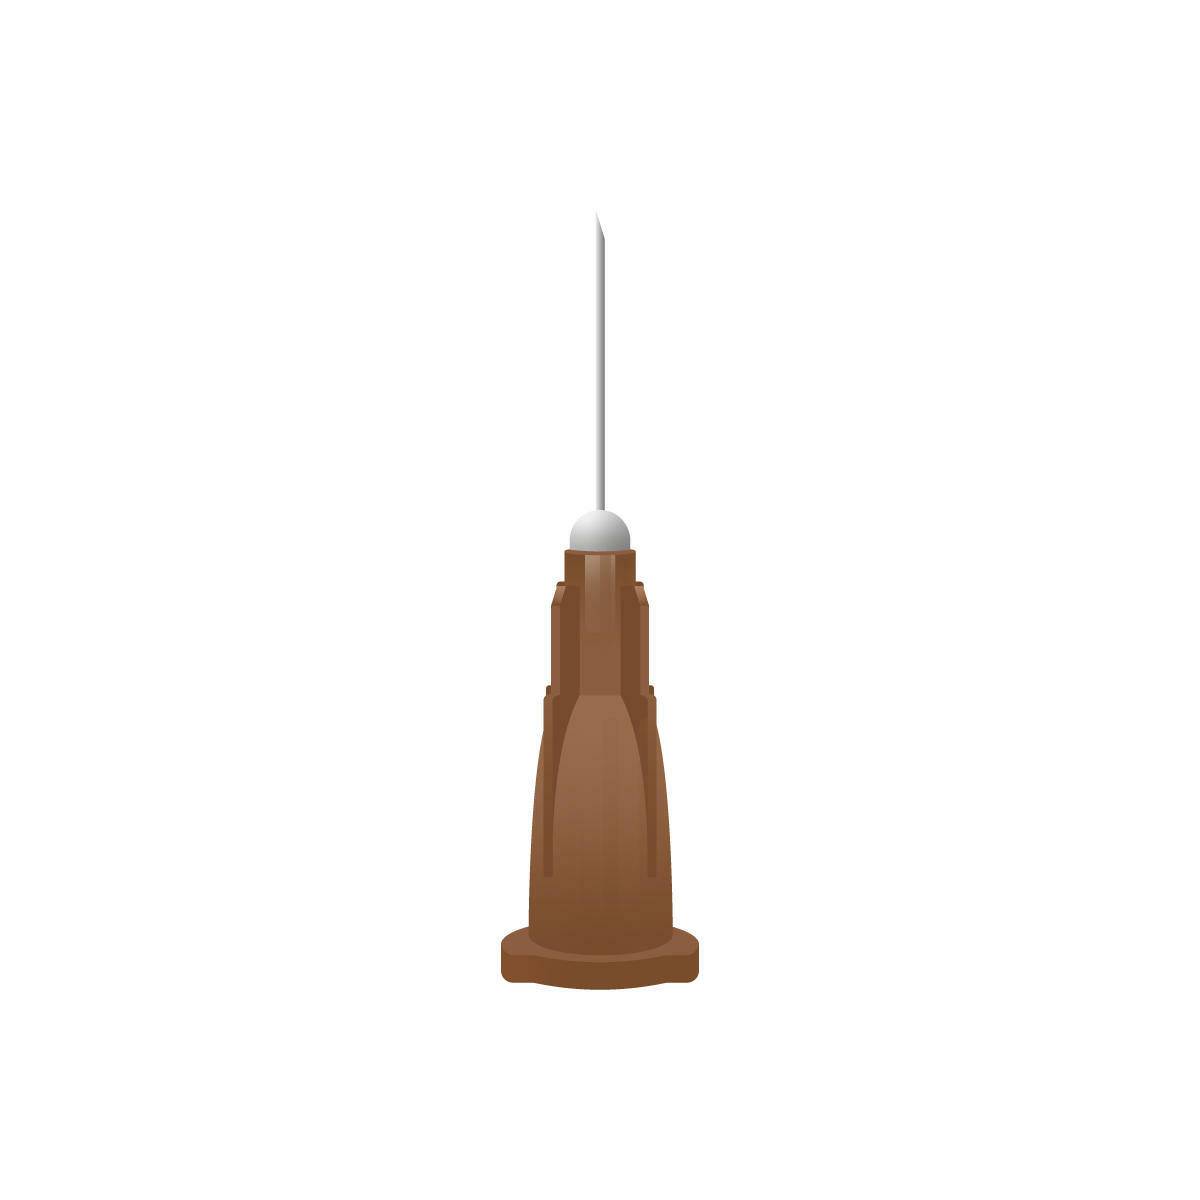 26g Brown 1/2 inch Unisharp Needles (13mm x 0.45mm) - UKMEDI